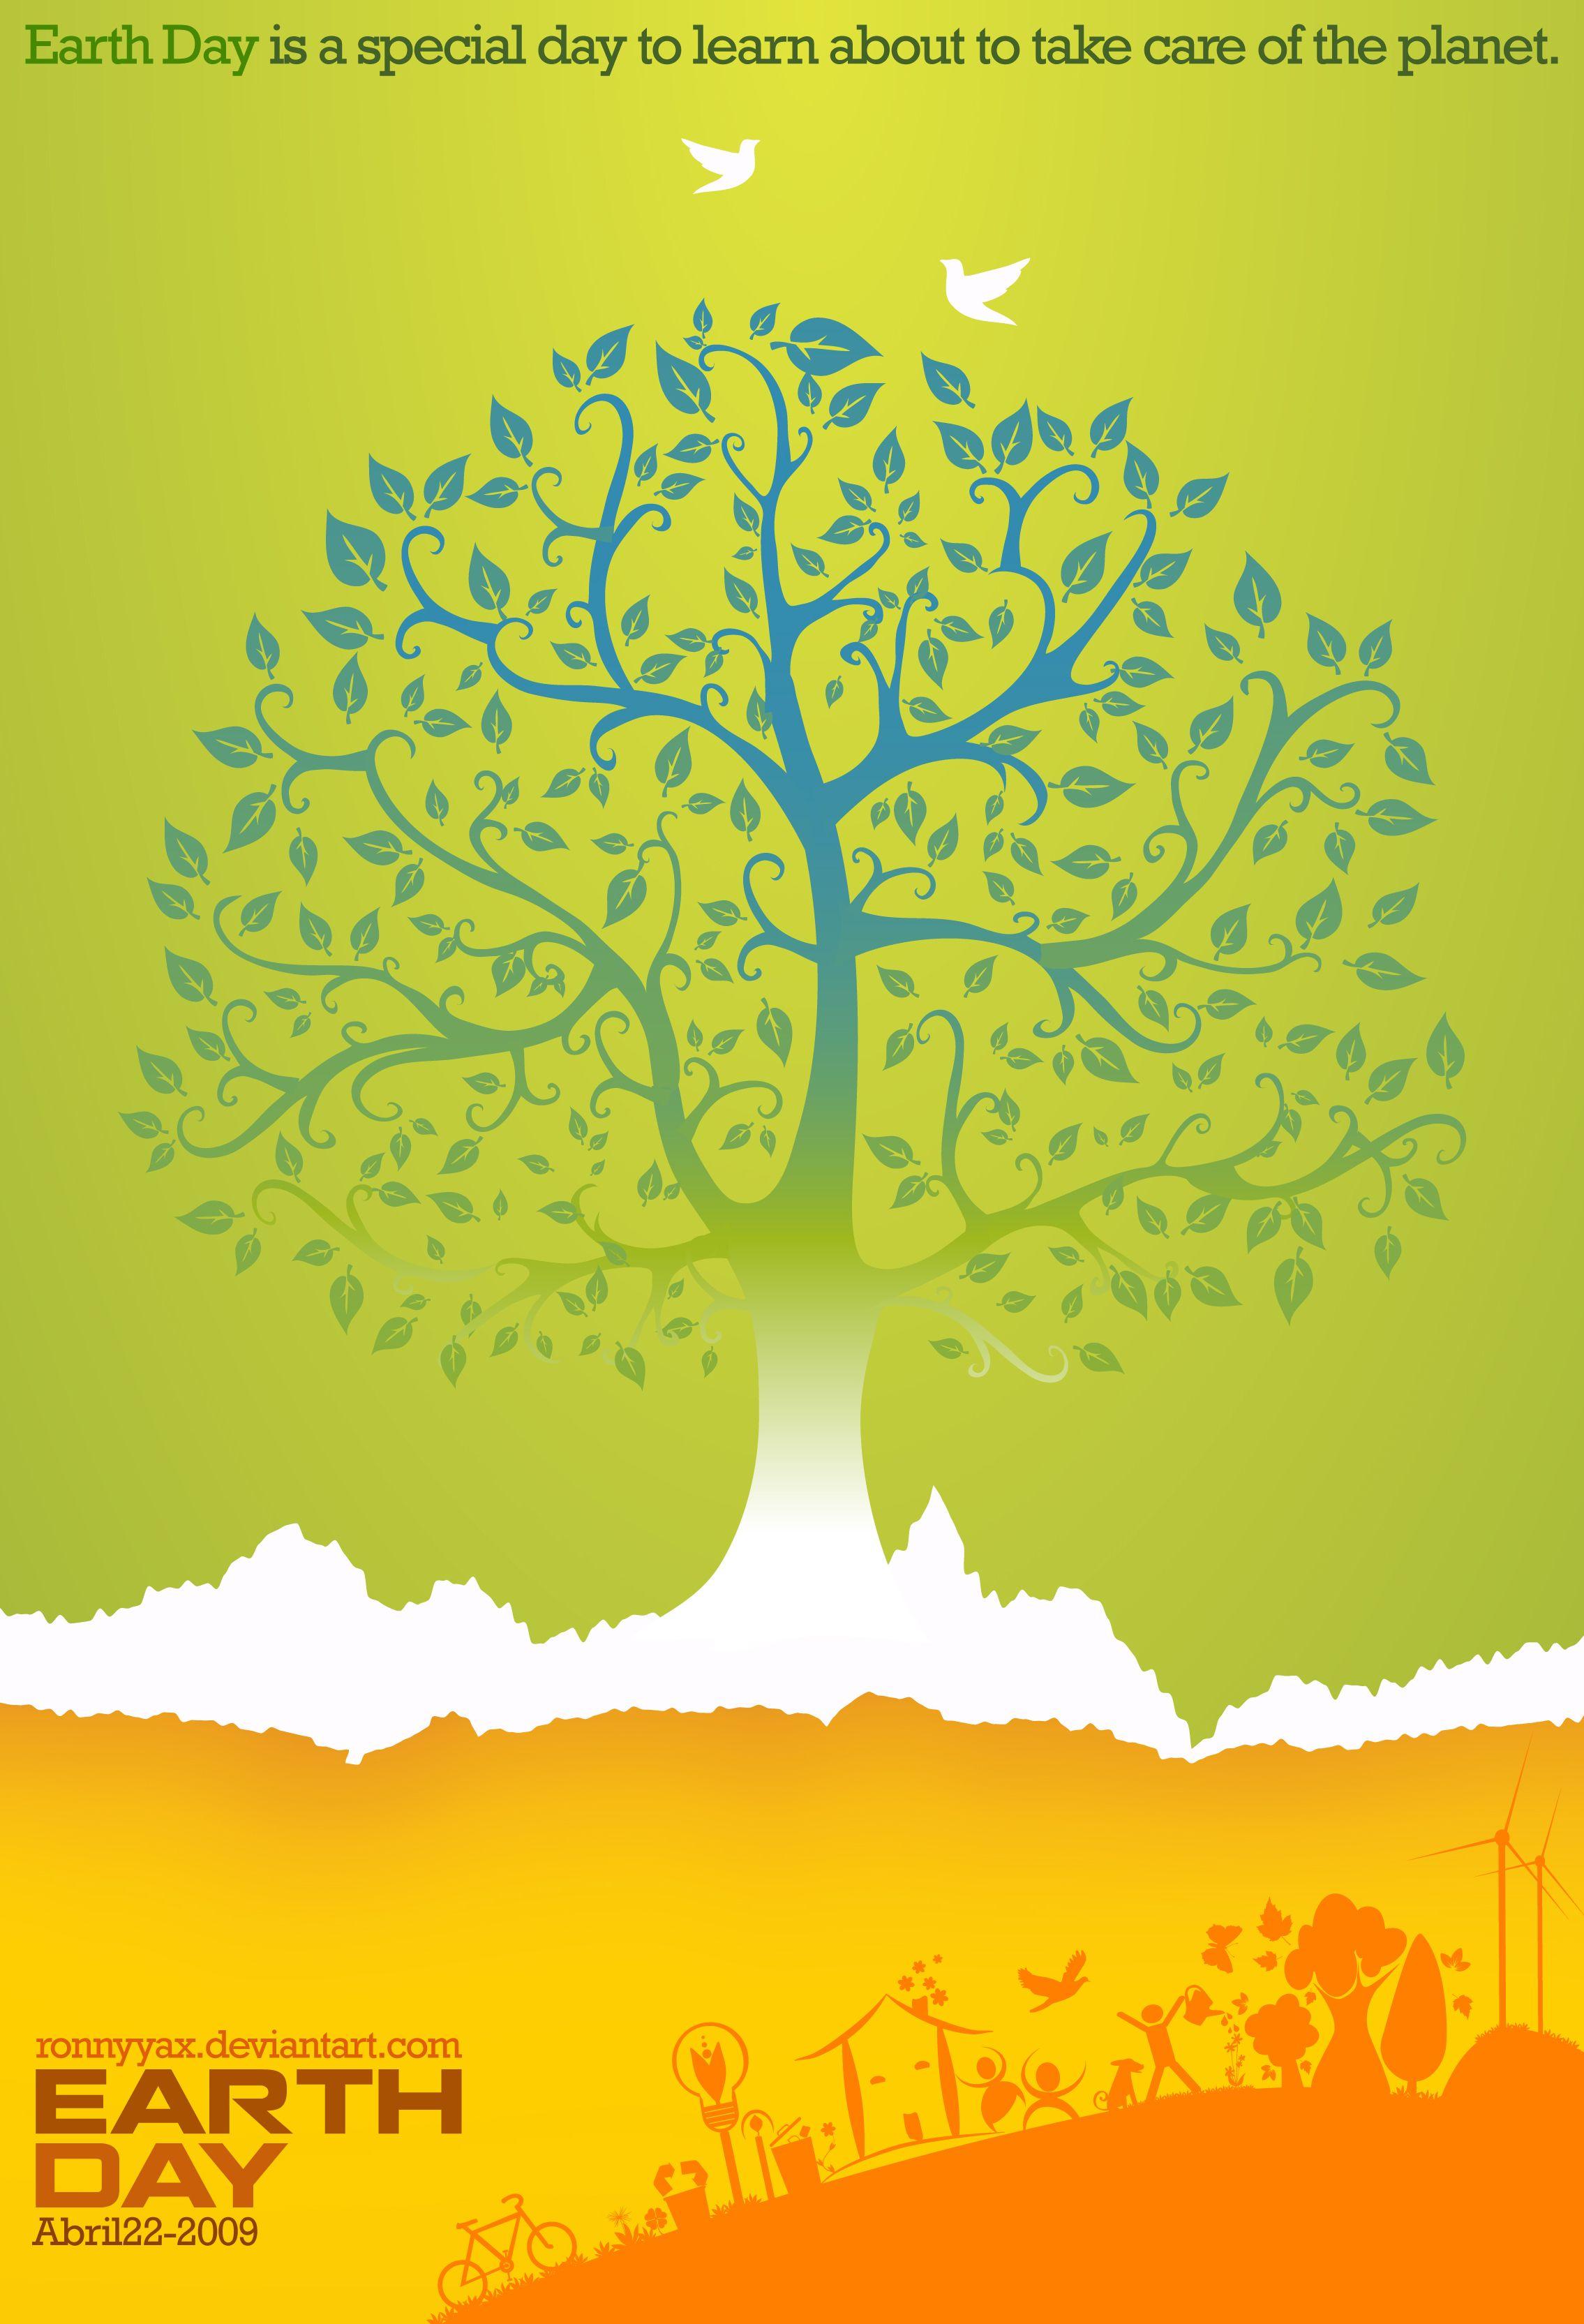 Earth Day 2012 Wallpaper